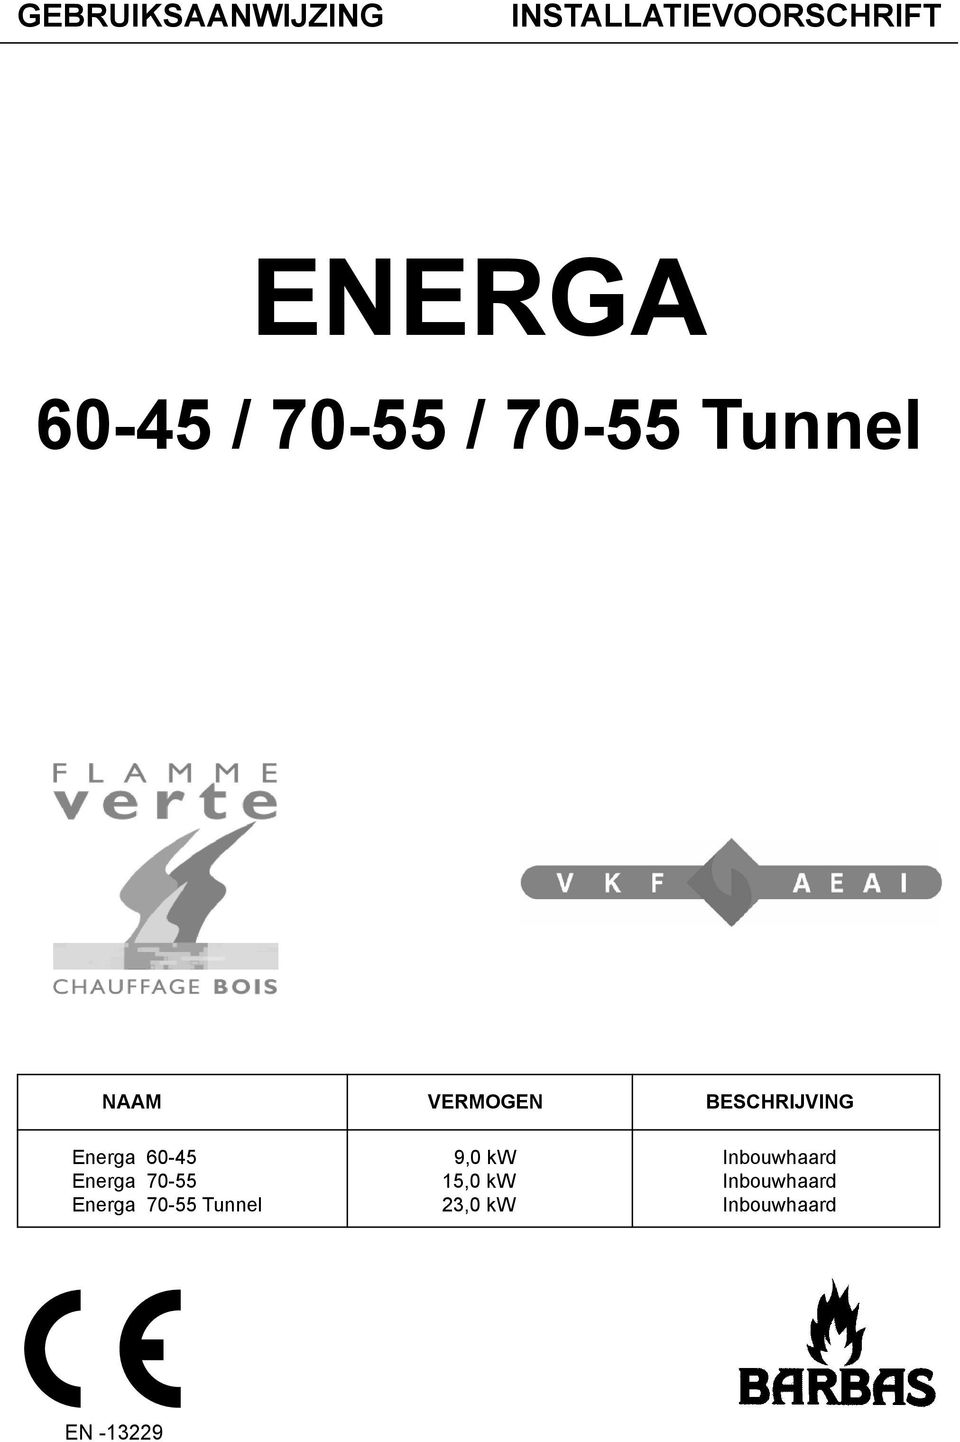 Energa 60-45 9,0 kw Inbouwhaard Energa 70-55 15,0 kw